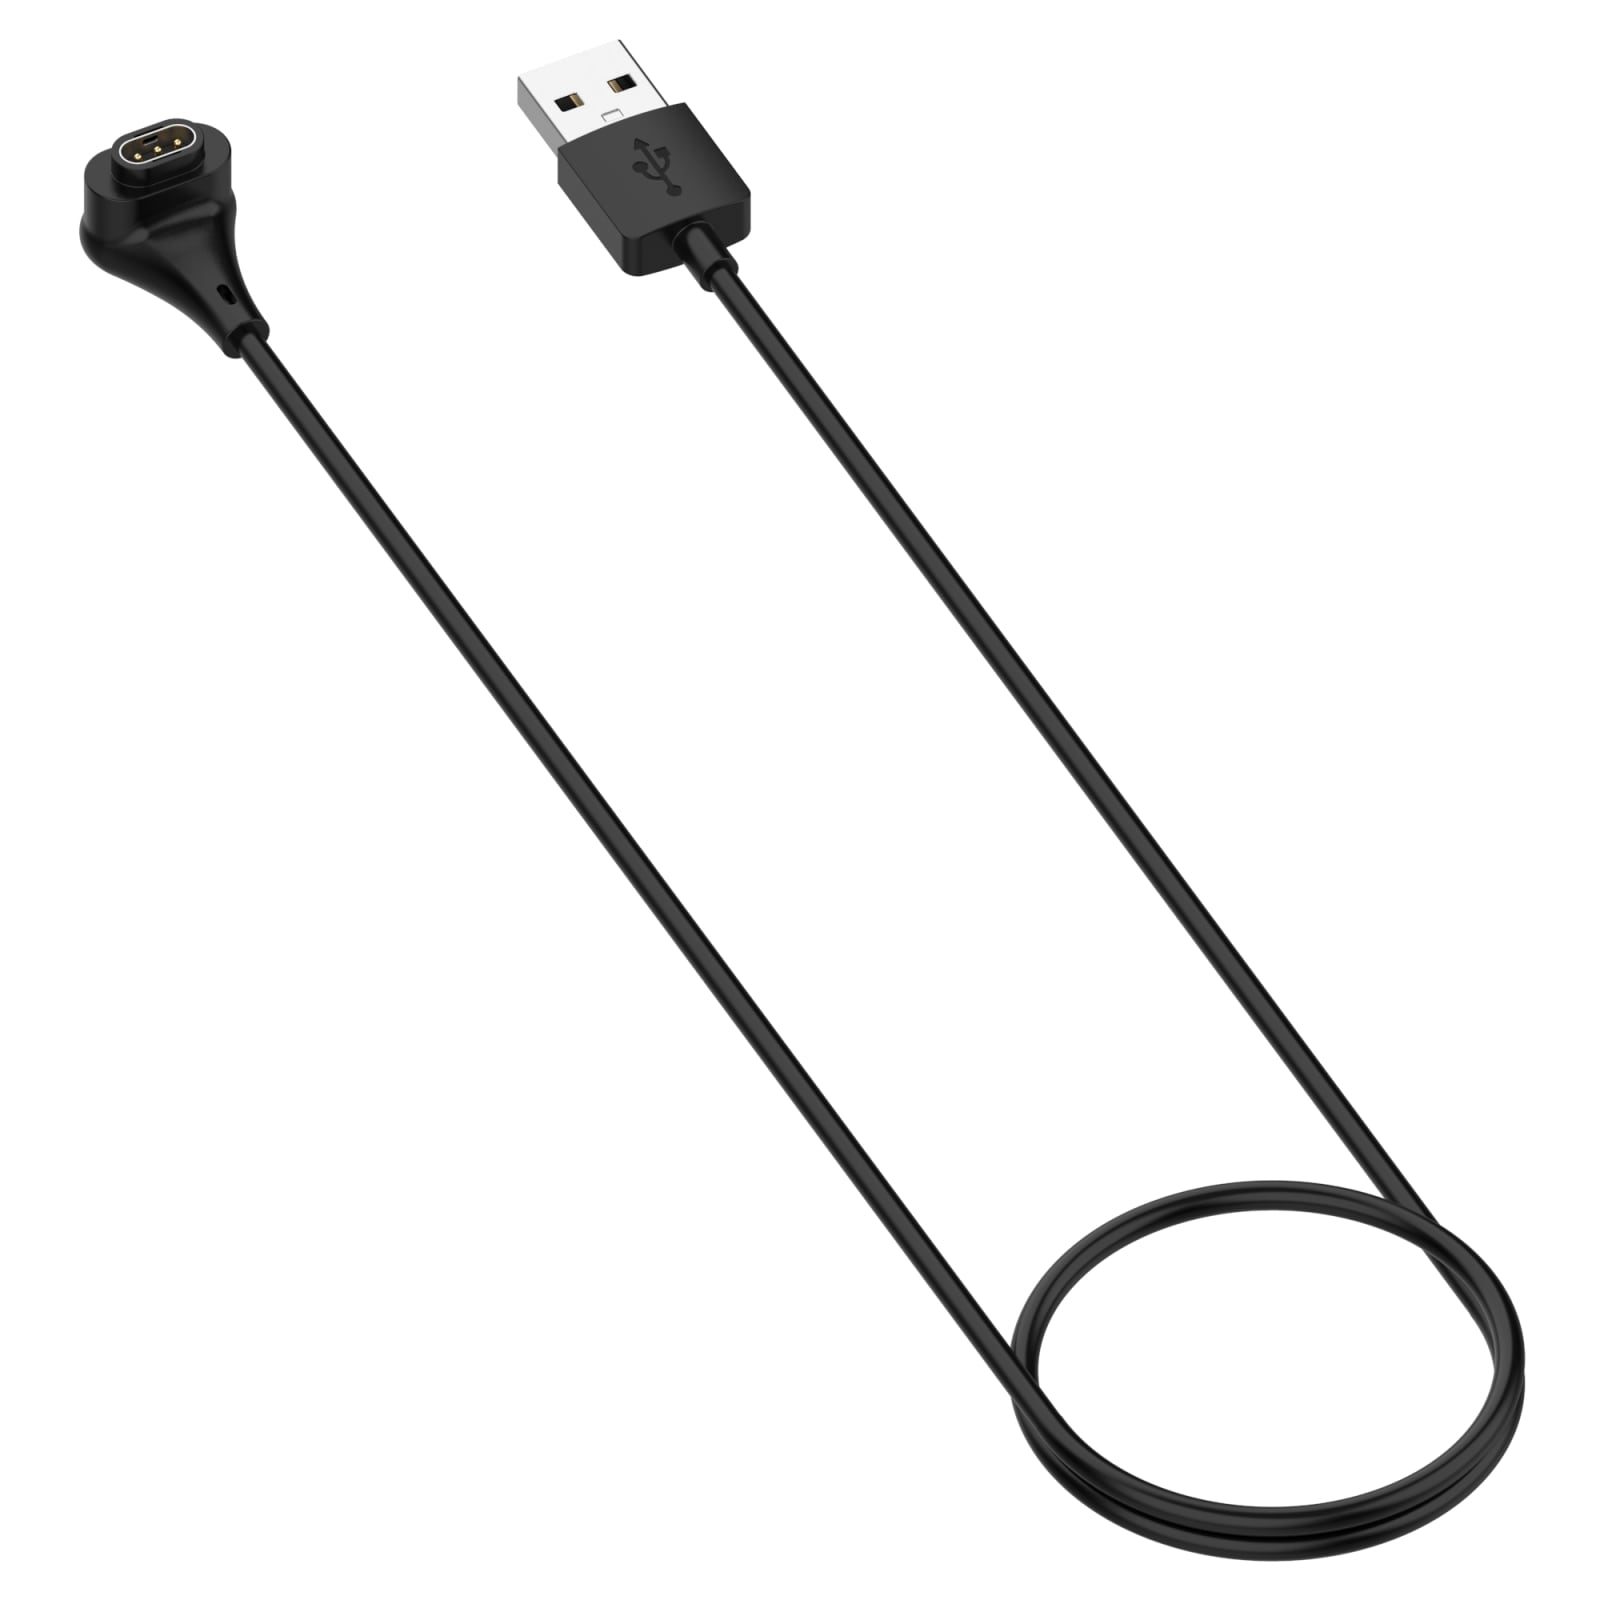 Latauskaapeli Casio G-SHOCK / GBD-H1000 - USB 1m - Musta